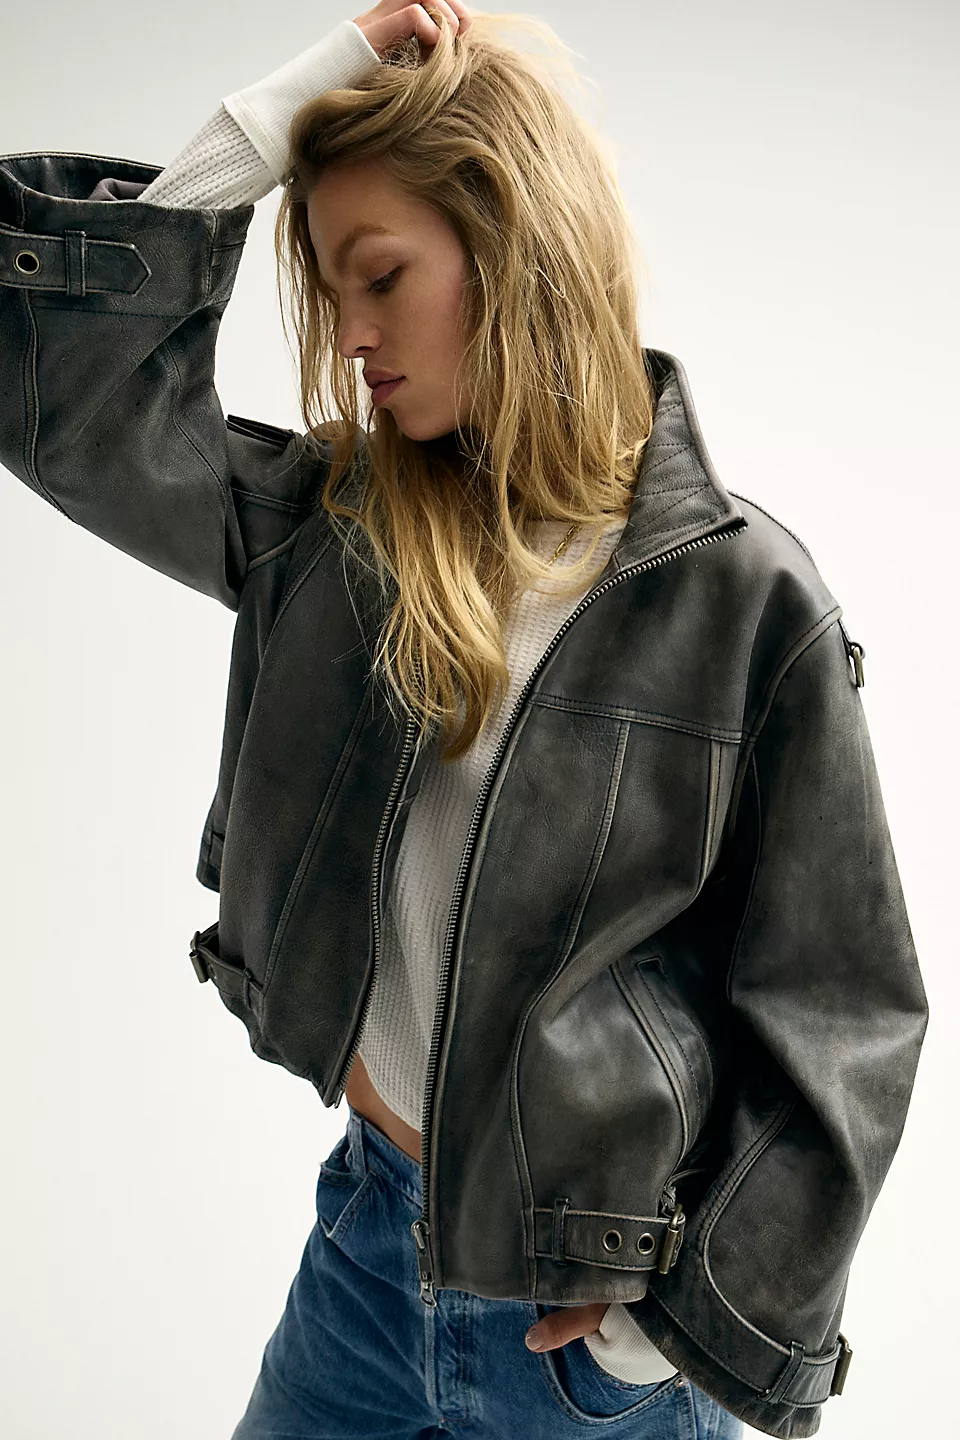 Skyline leather jacket